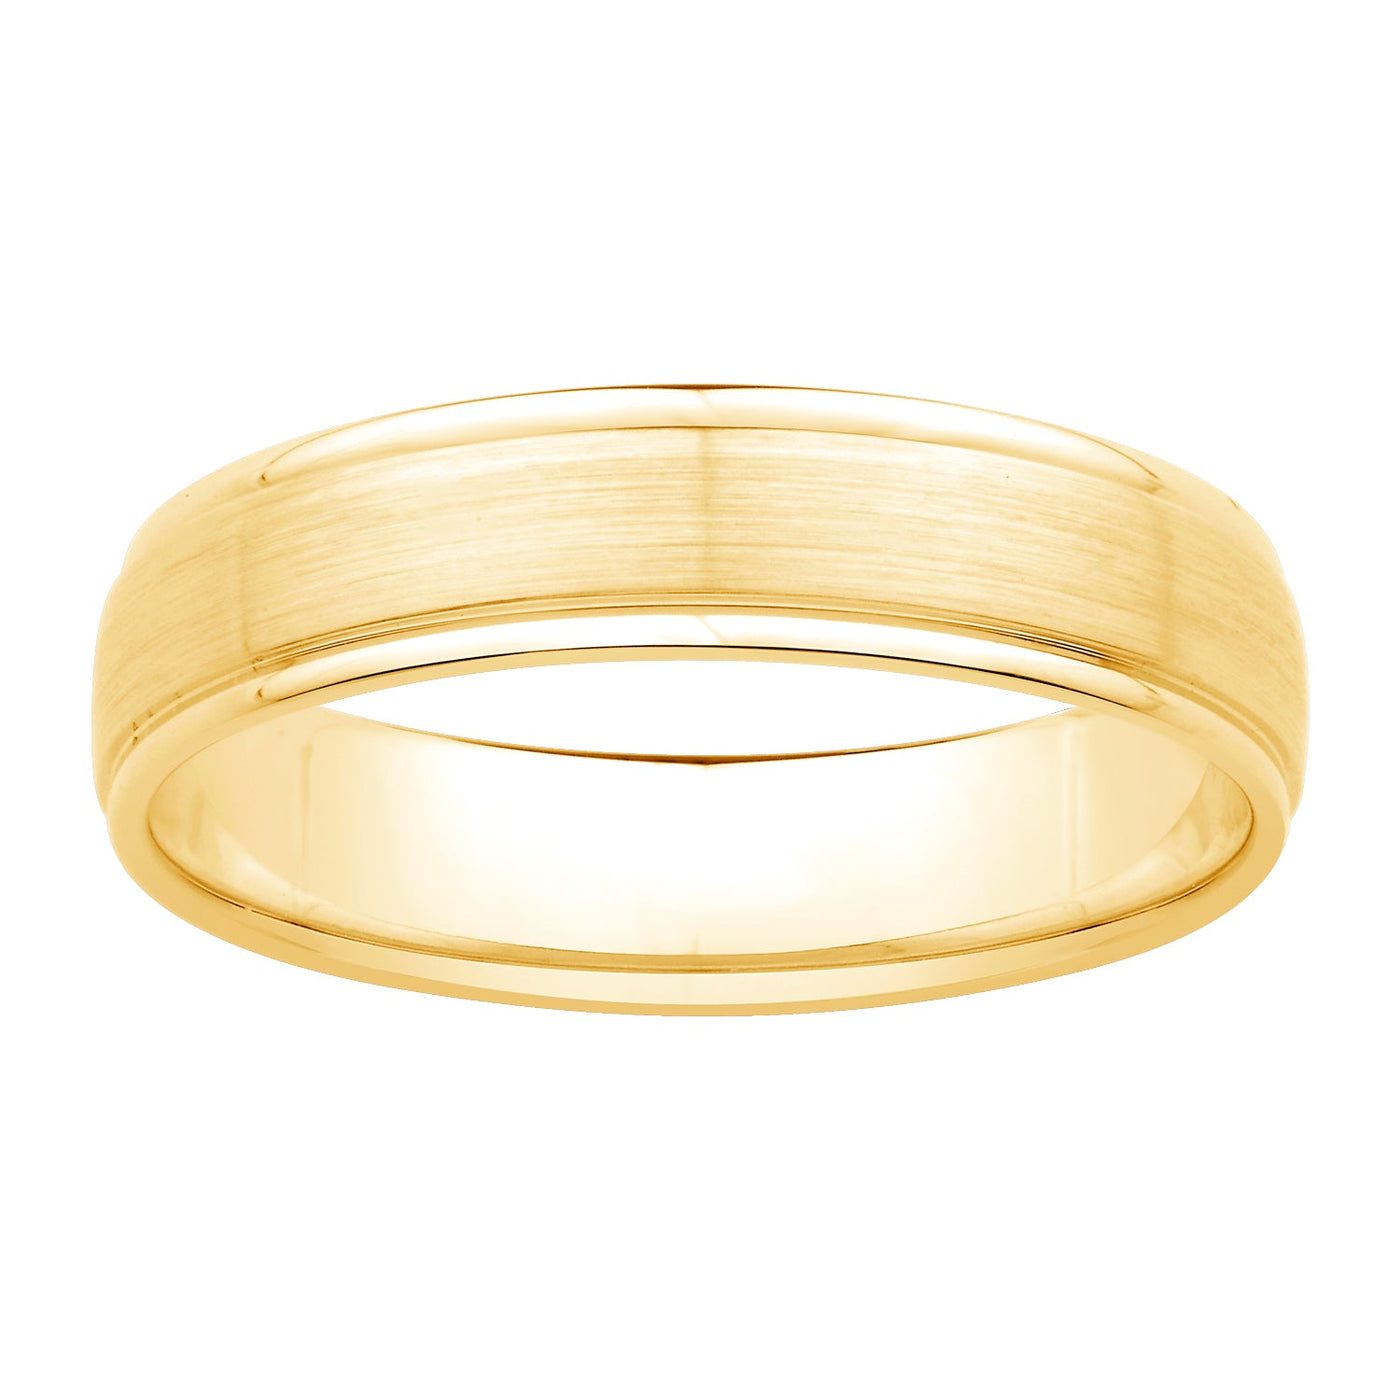 10K Yellow Gold Gents Wedding Ring